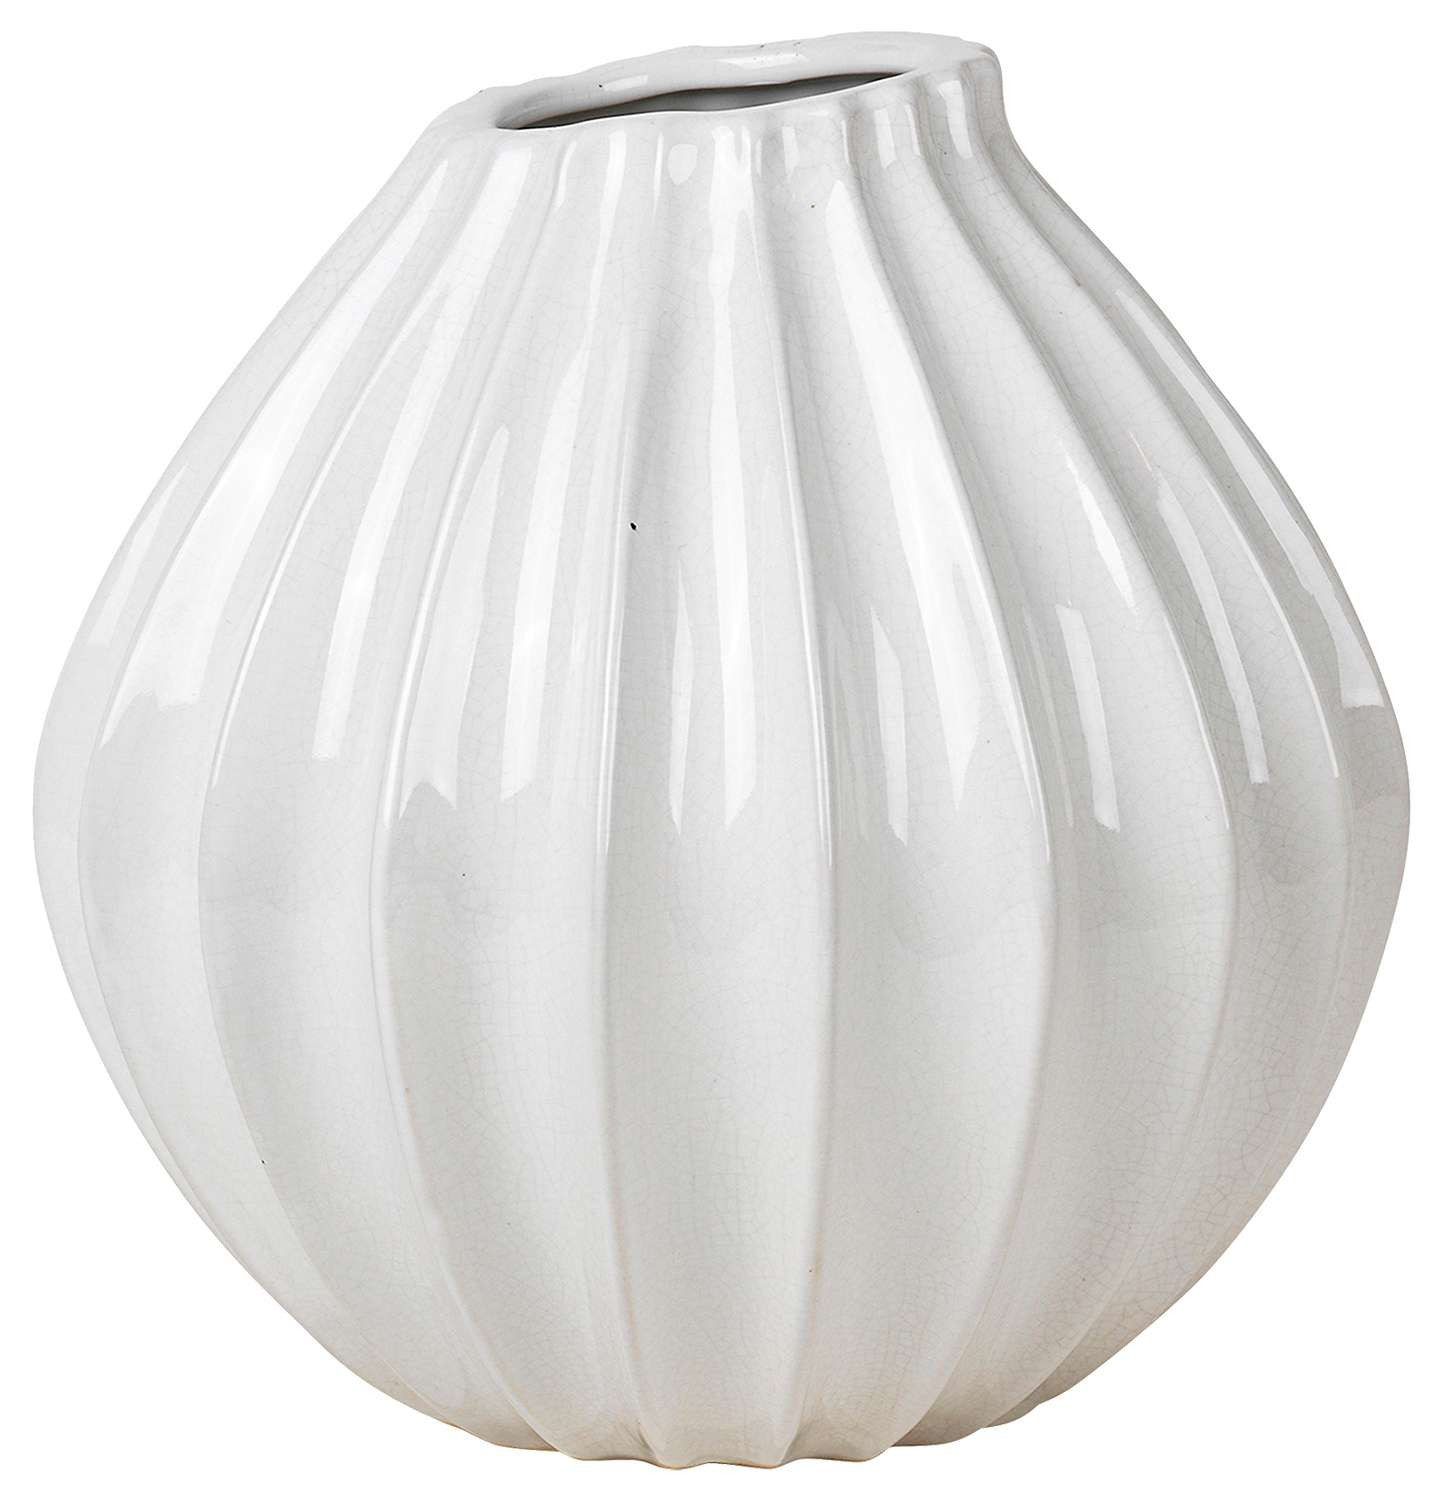 22 Famous Kosta Boda Glass Vase 2022 free download kosta boda glass vase of broste copenhagen wide vase height 25 cm scandinavian lifestyle with regard to 5710688149643 bilder 1280x12802x